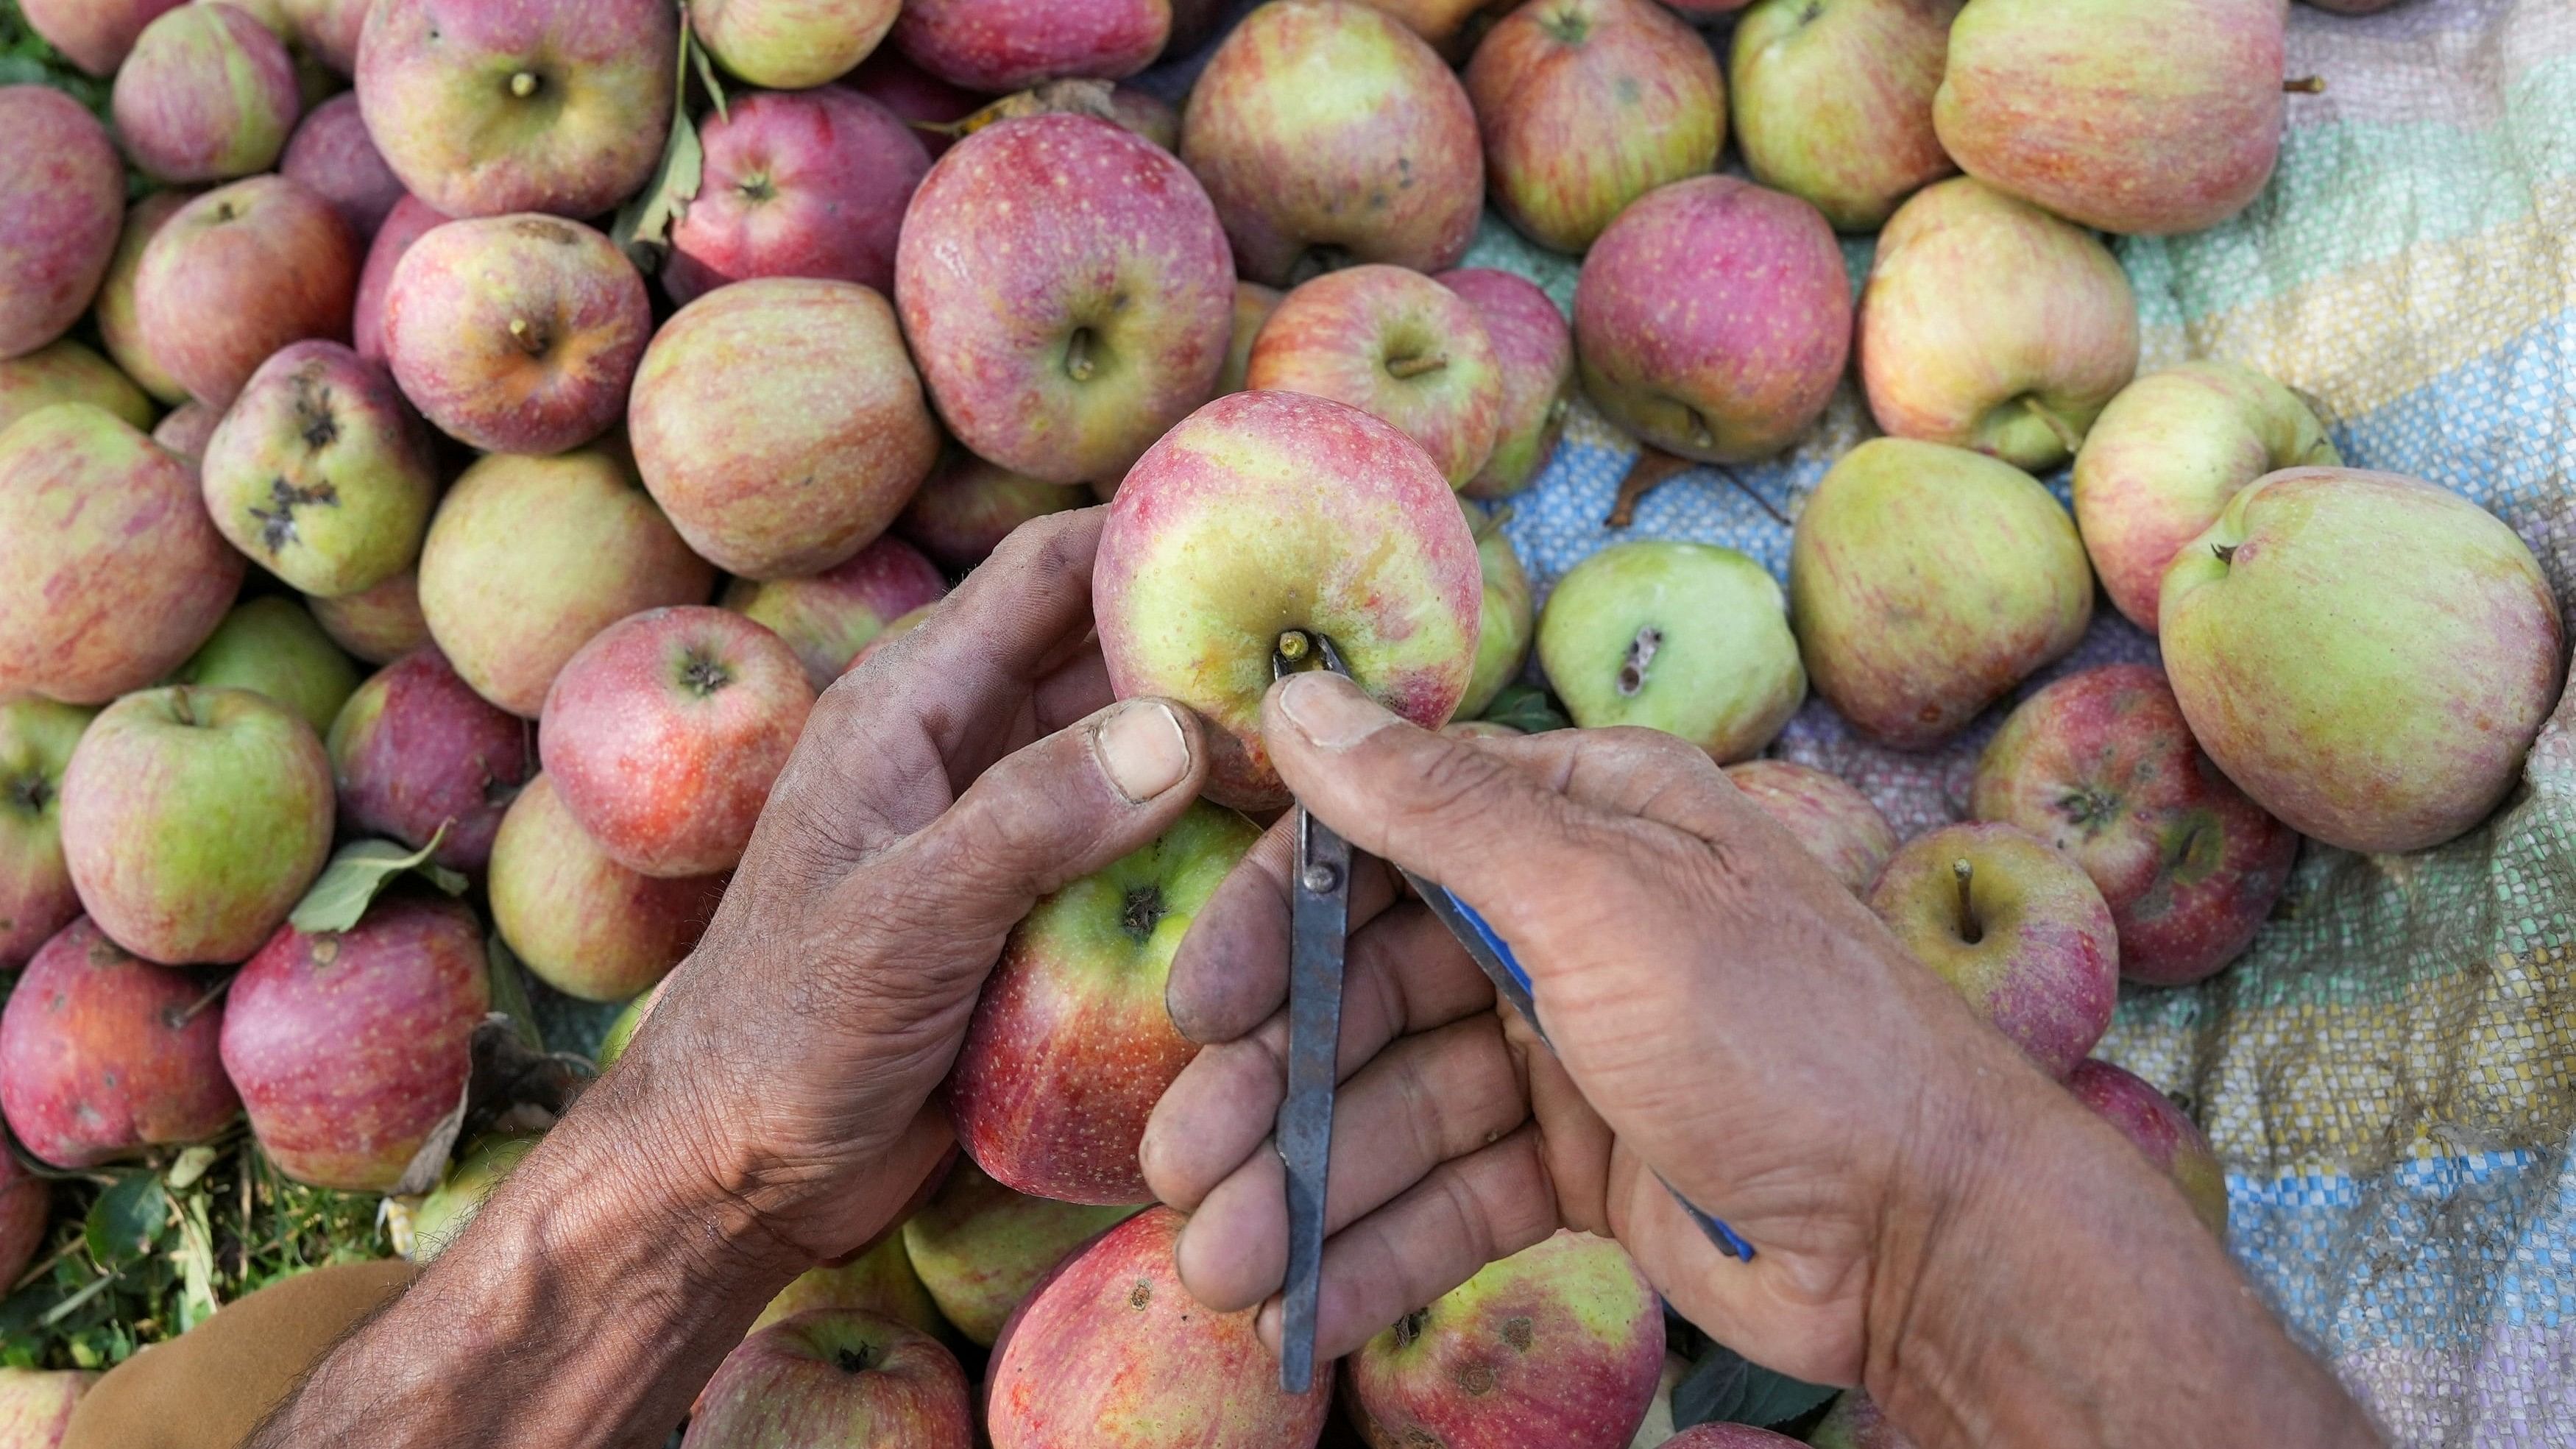 <div class="paragraphs"><p>A farmer sorts apples at an orchard in Kashmir.</p></div>